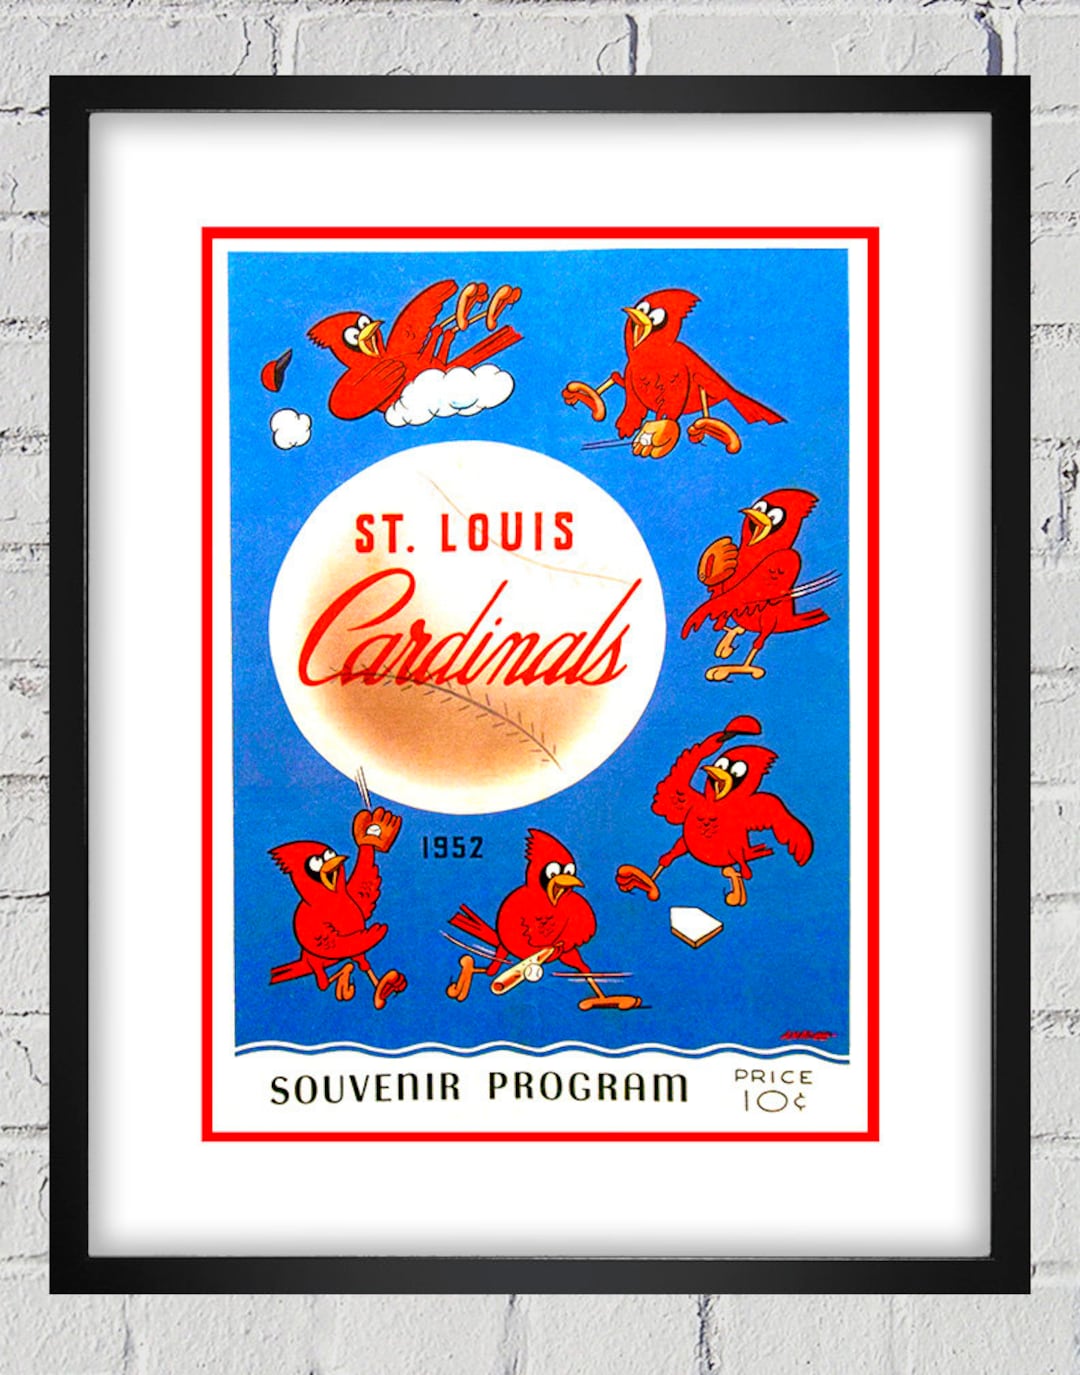 1952 Vintage St. Louis Cardinals Baseball Program Cover 